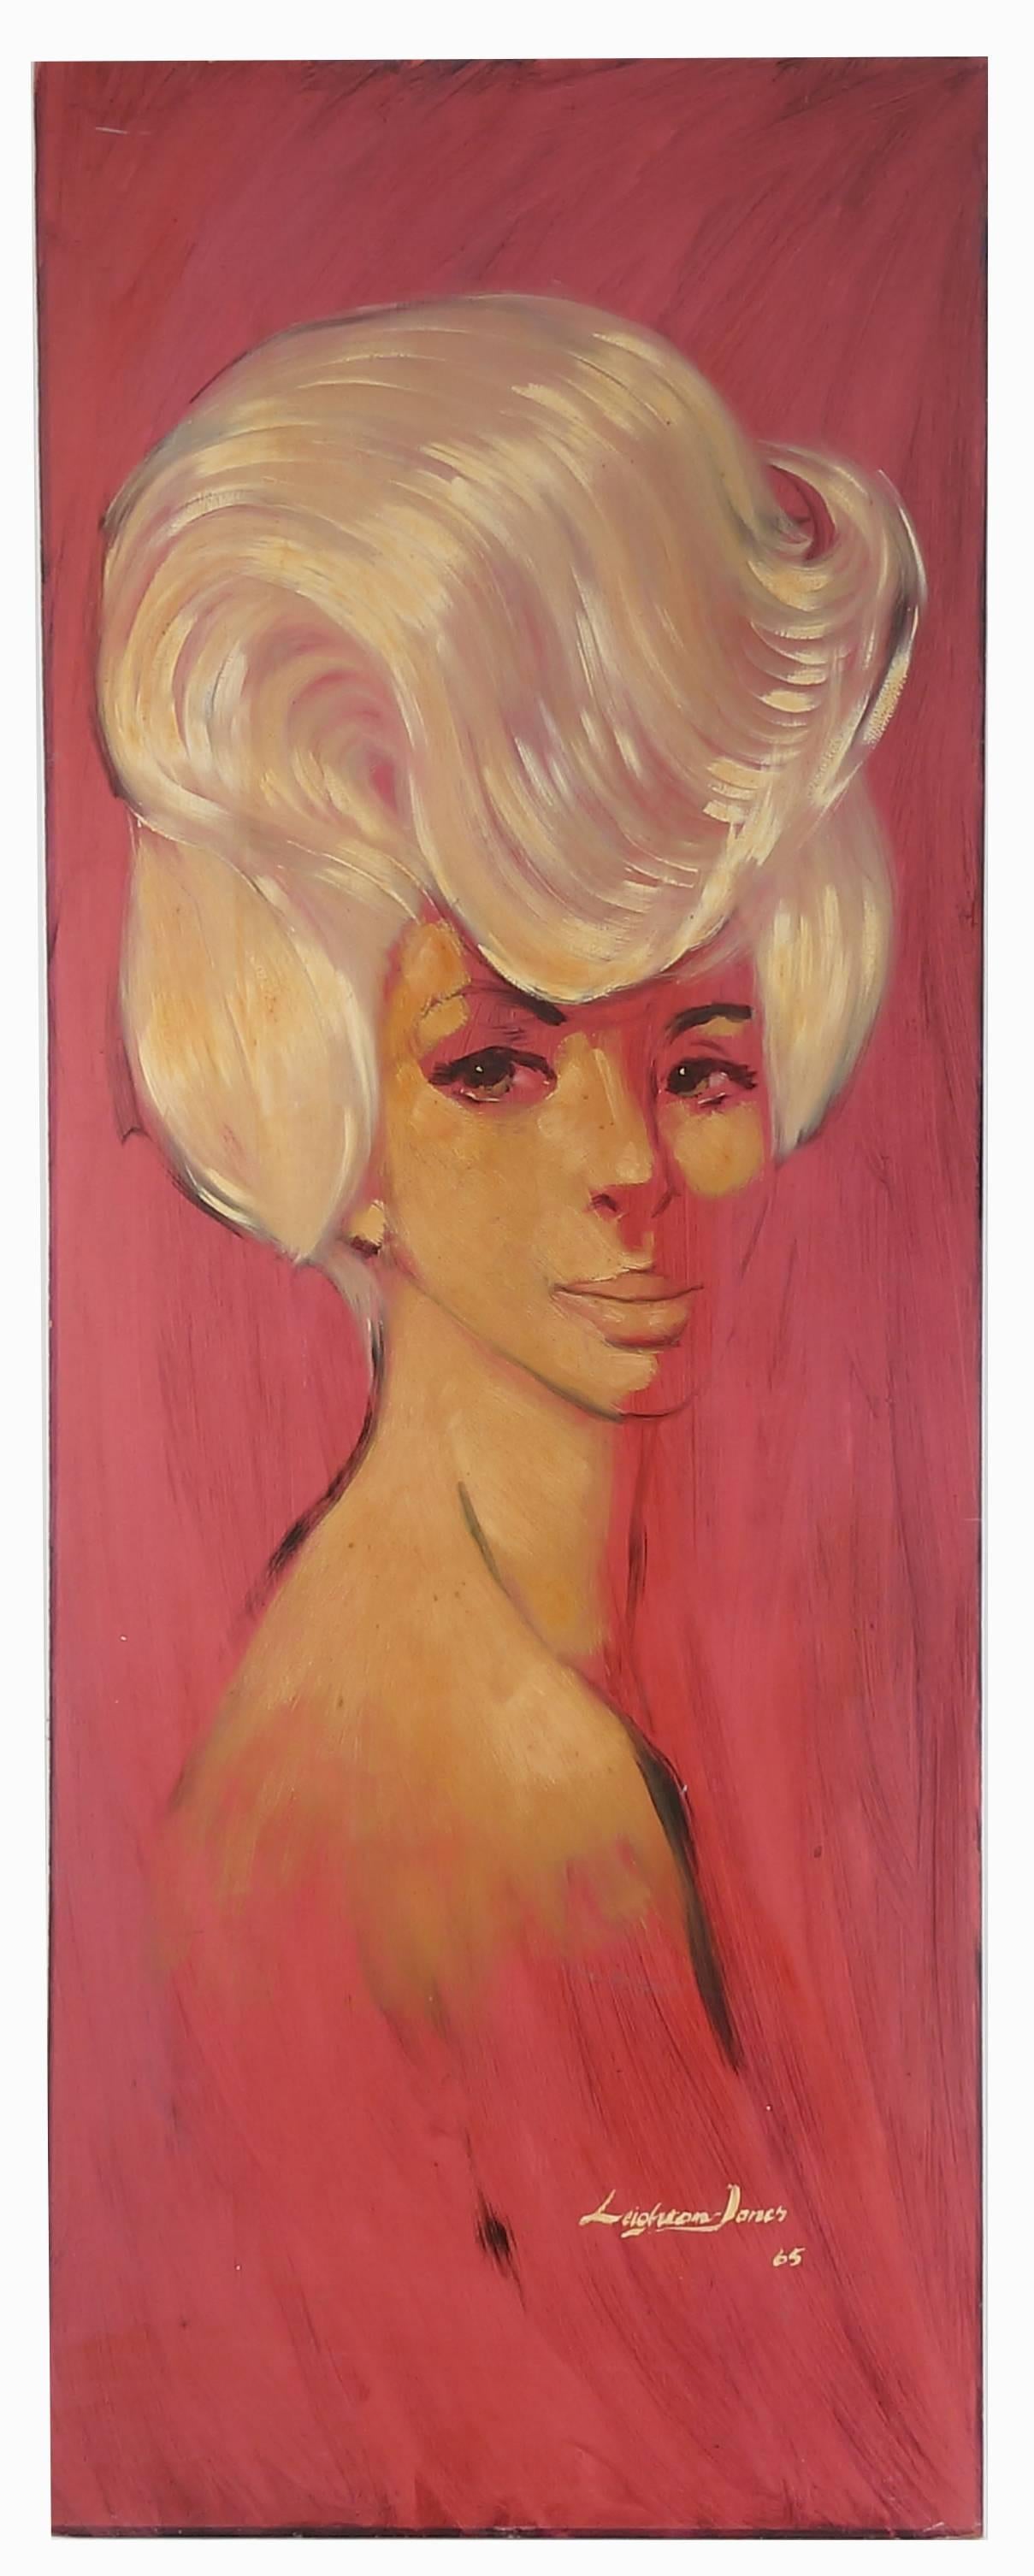 Barry Leighton-Jones Portrait Painting - Portrait of a Blonde, circa 1965